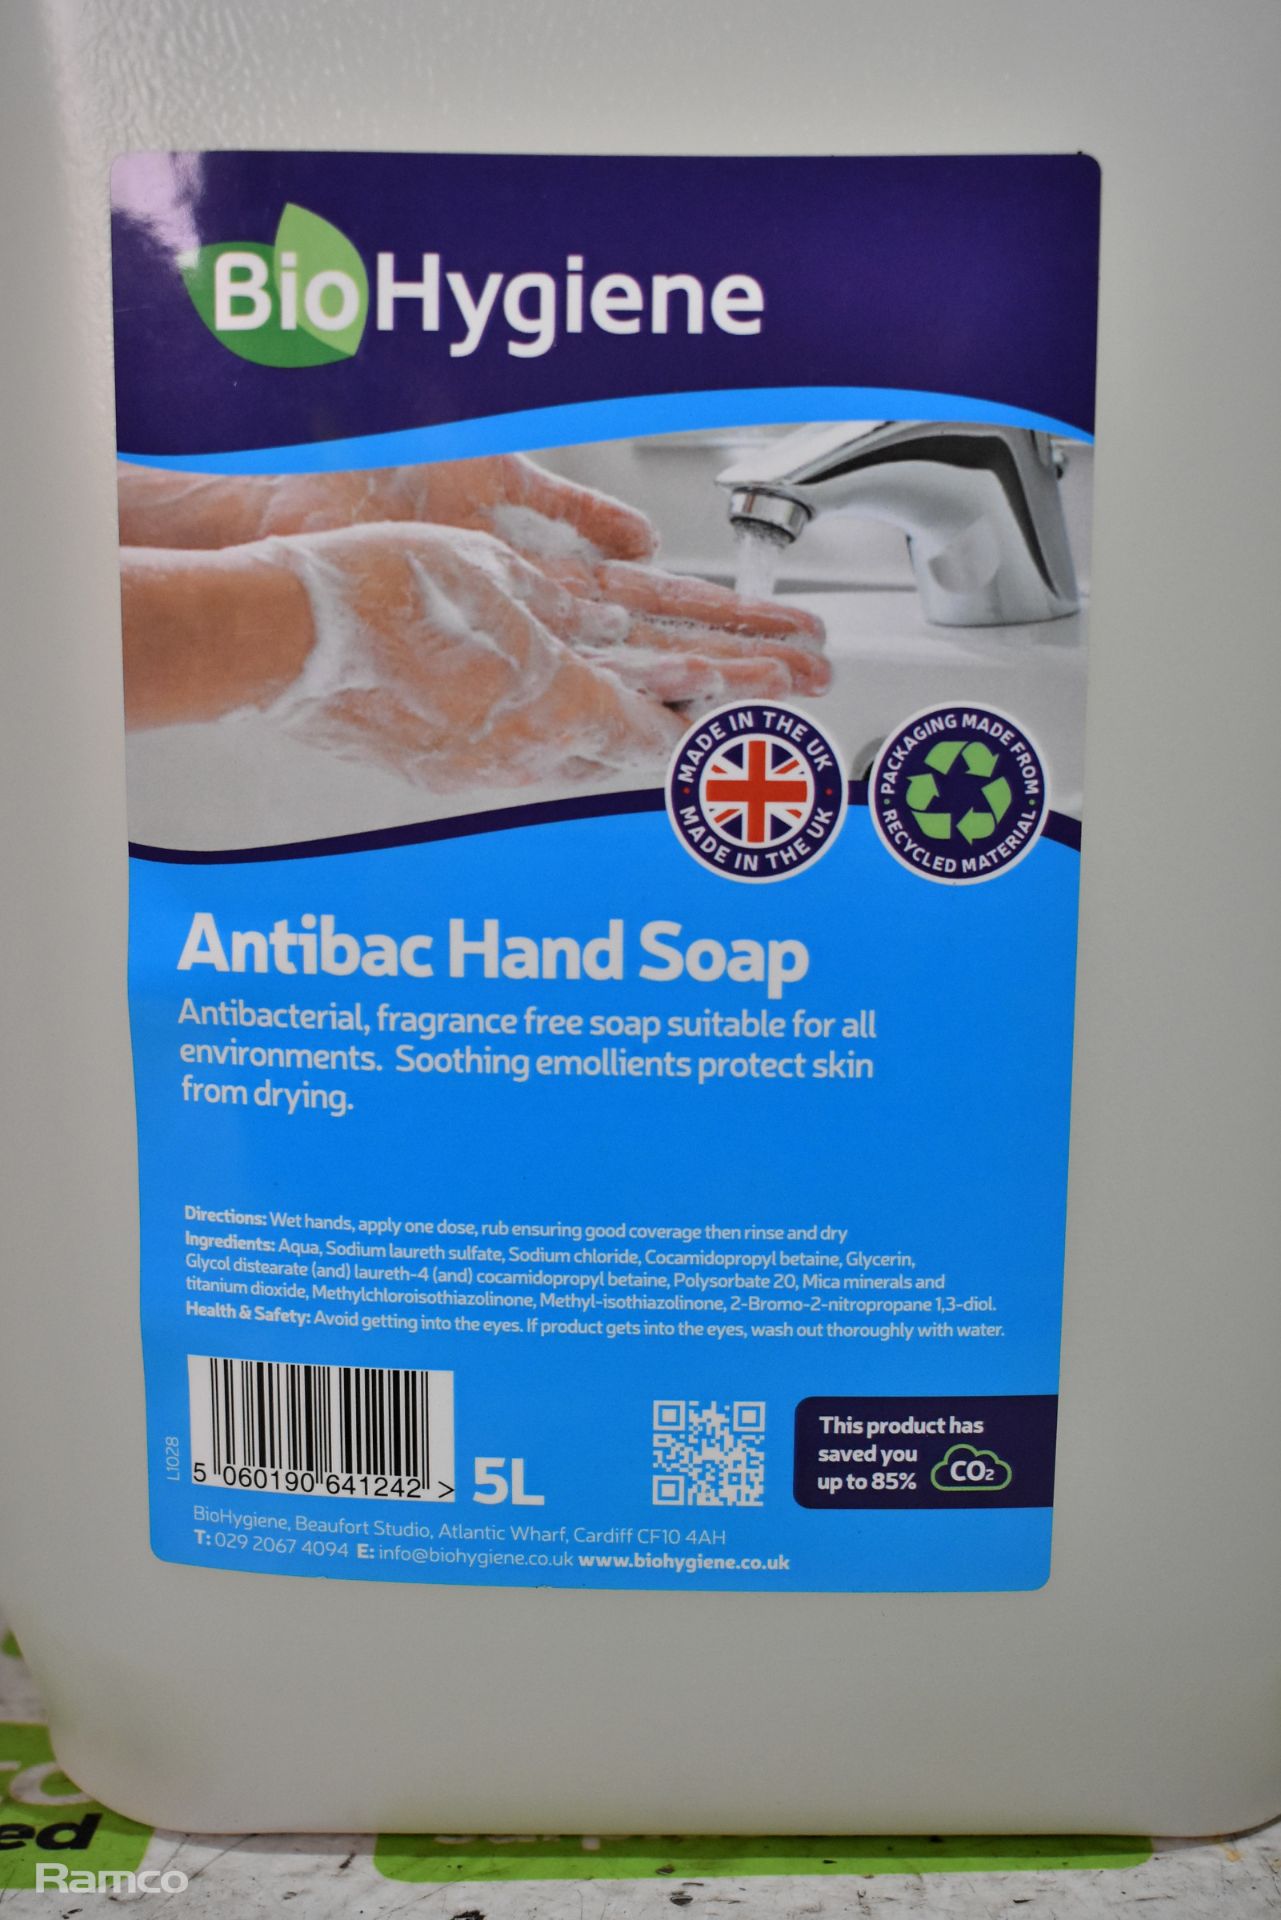 3x boxes of Bio Hygiene 5L anti bac hand soap - 2 bottles per box - Image 2 of 3